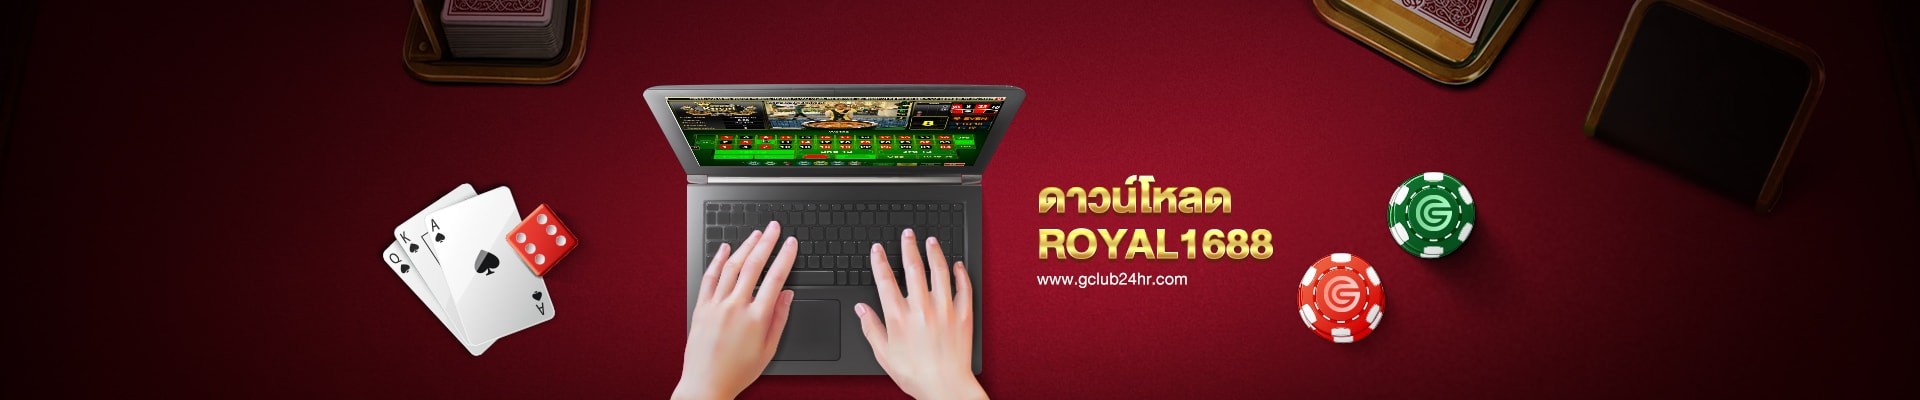 gclub24hr_casino_online_royal1688_download